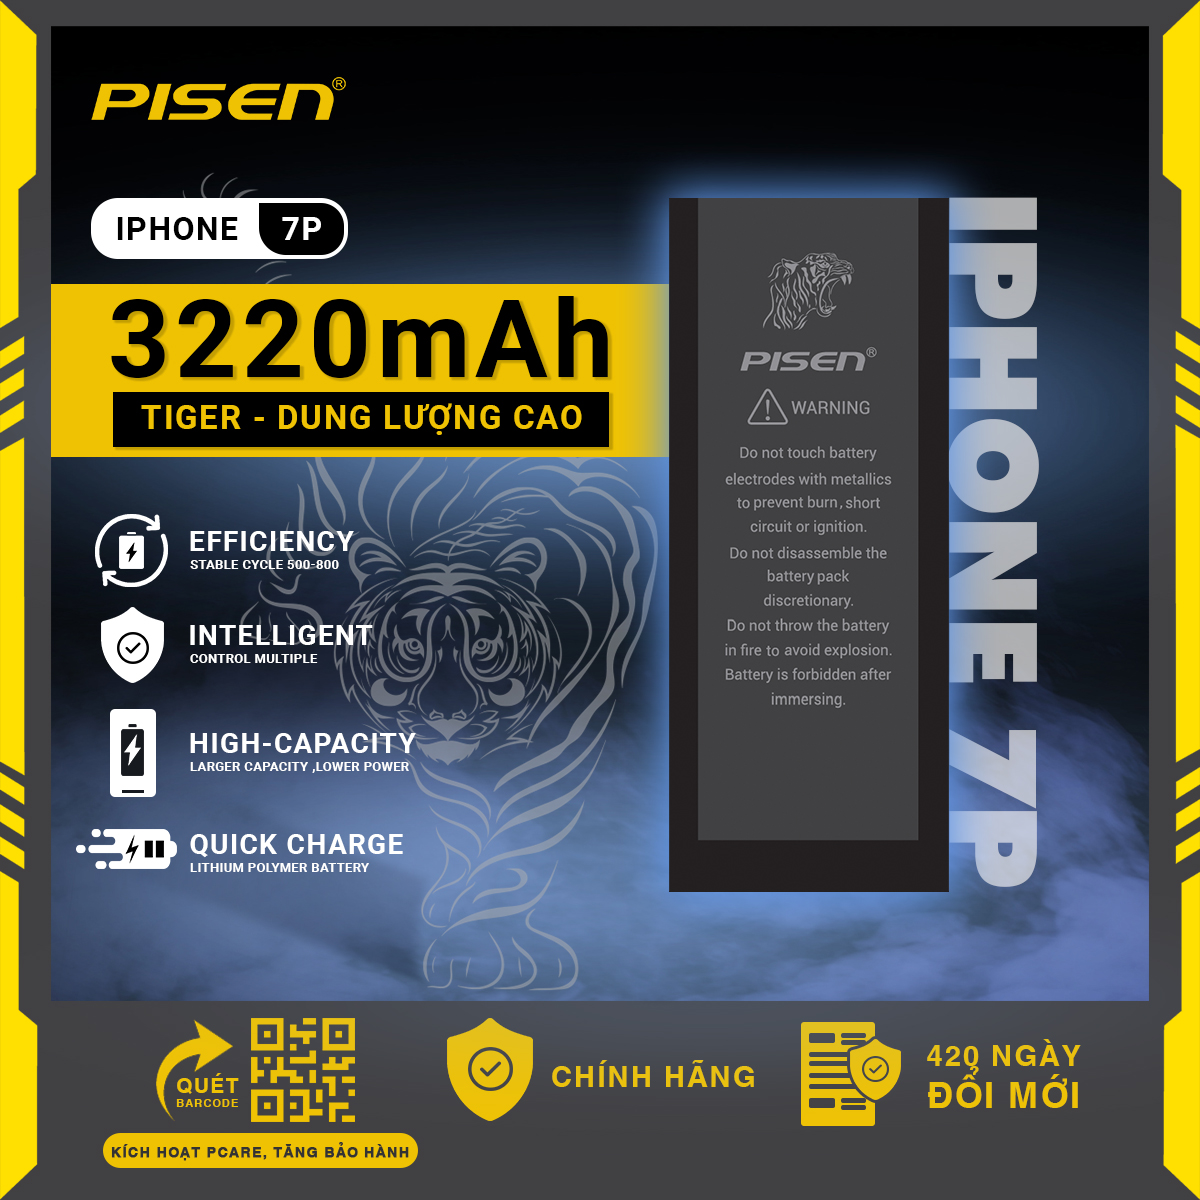 PISEN Tiger i7P - Pin dung lượng cao iPhone i7 Plus - 3220mAh ( Pin iPhone 7 Plus )